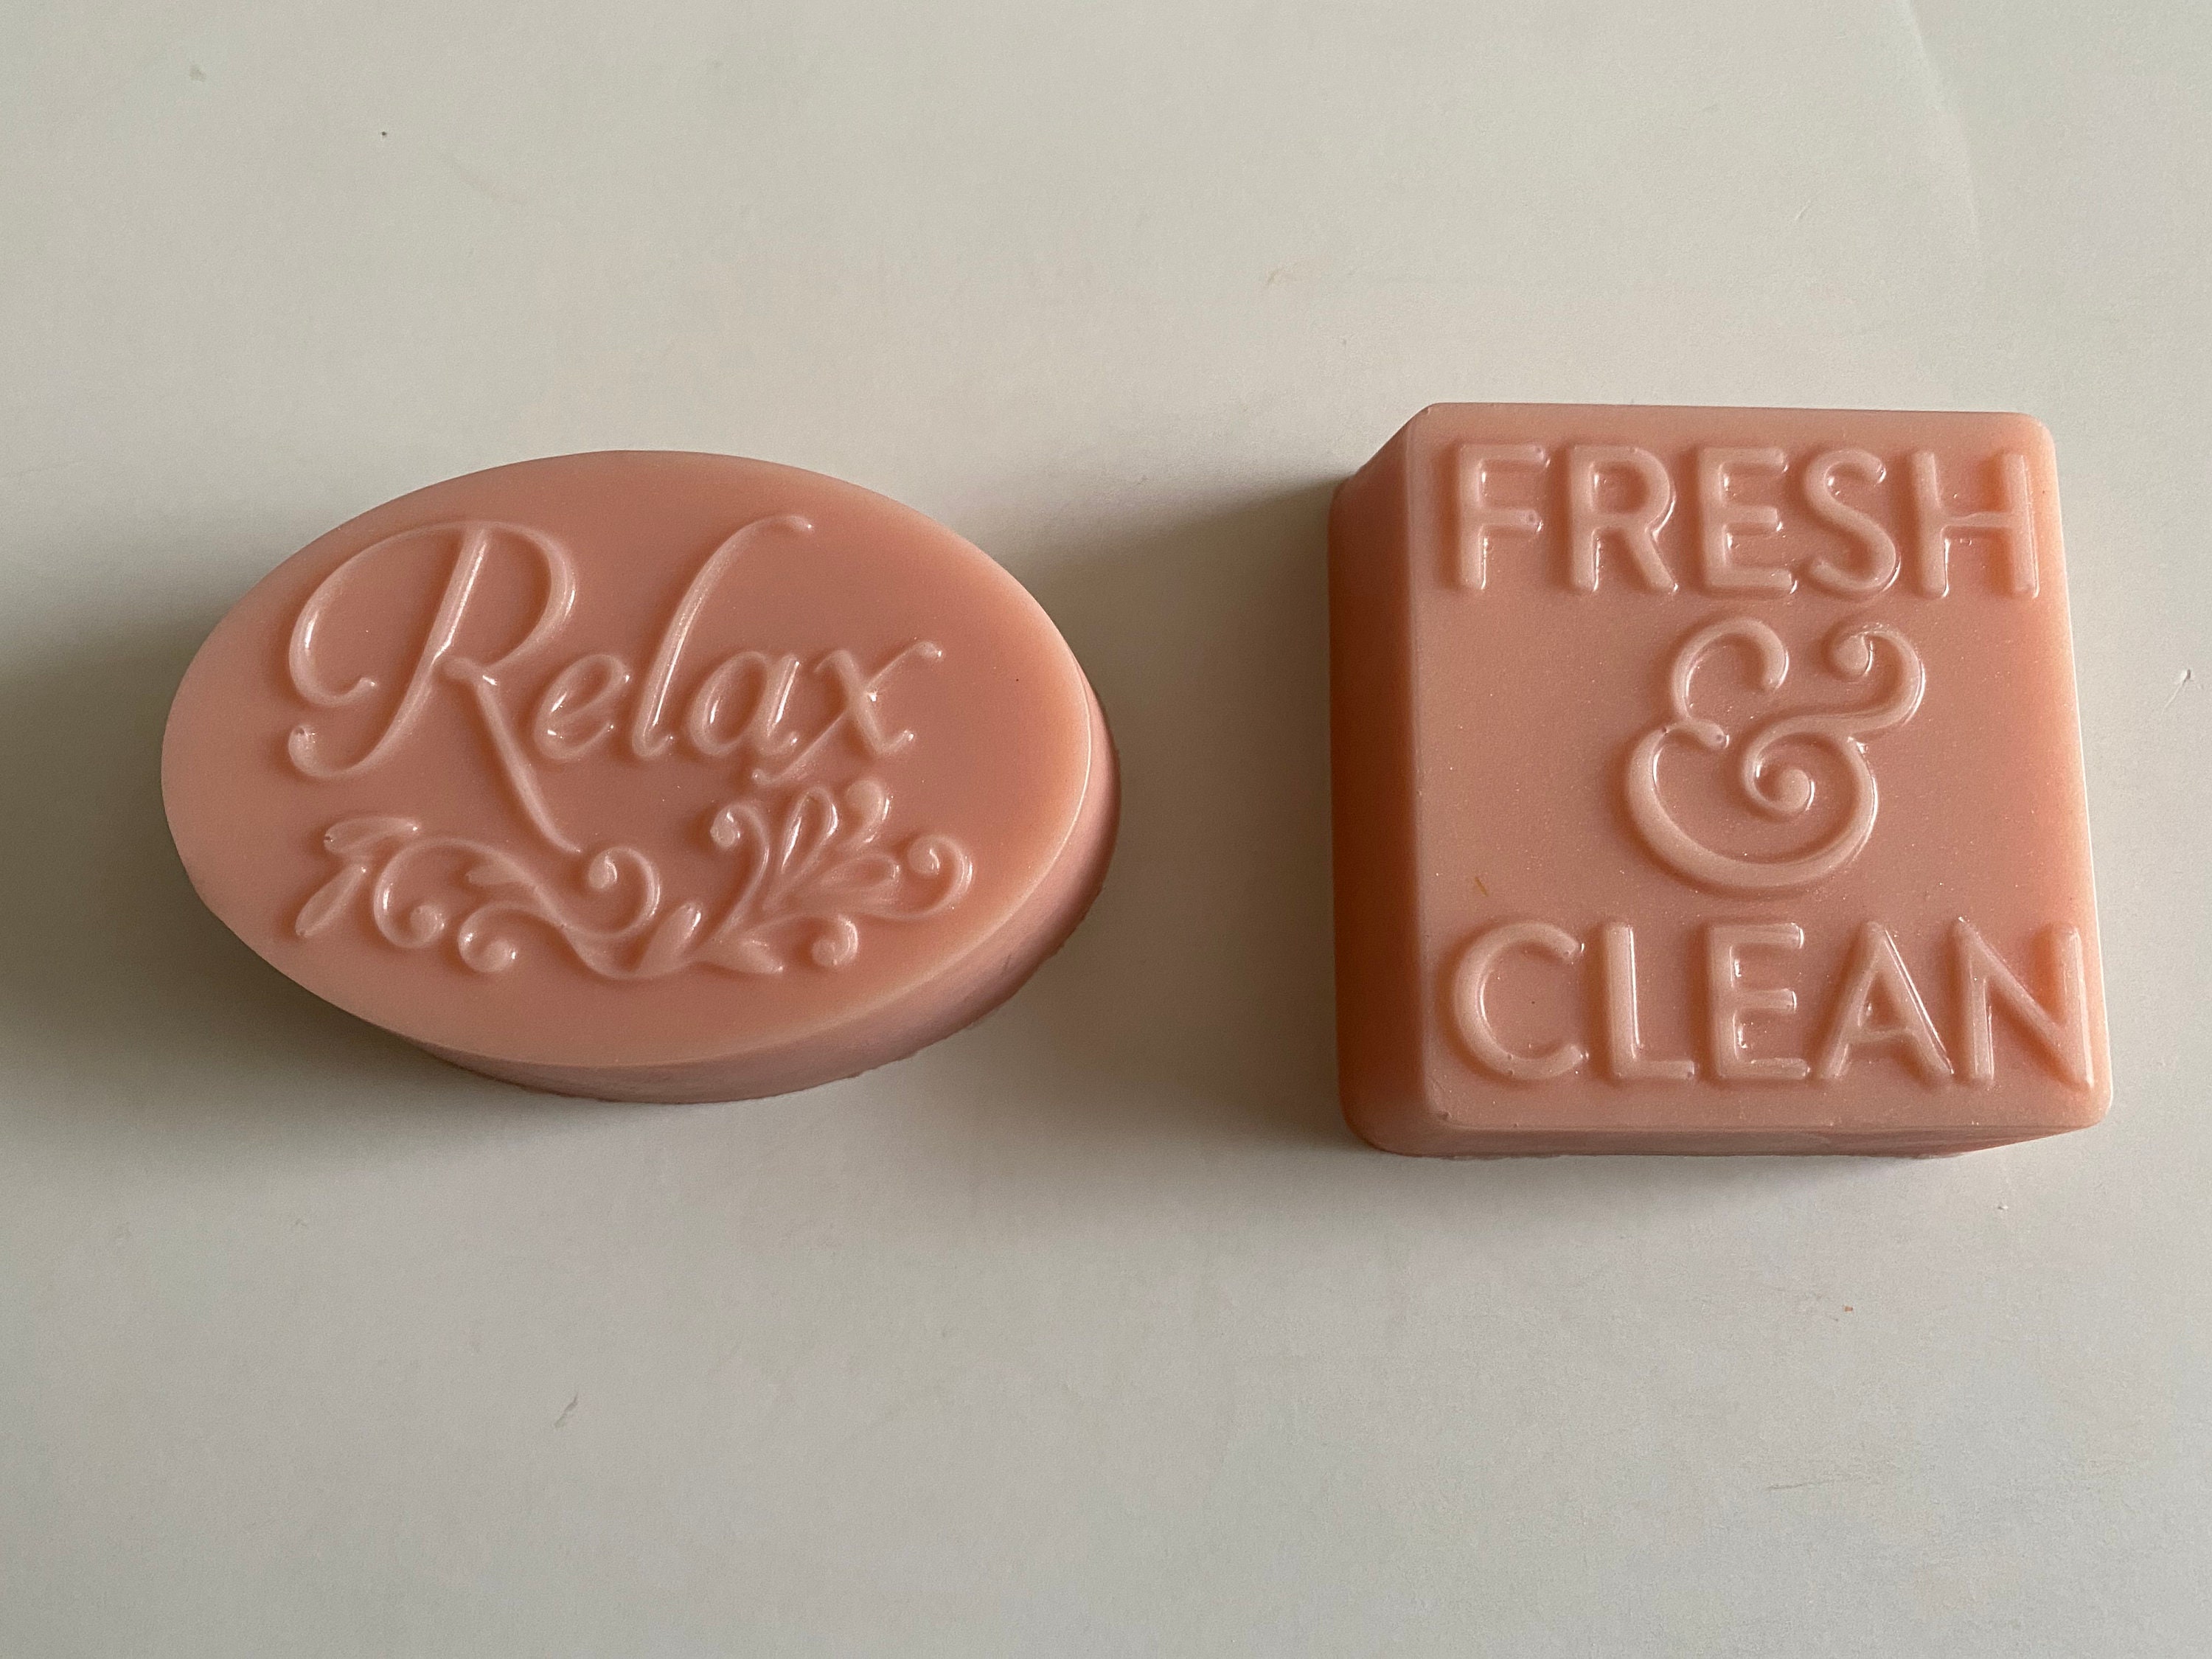 Clean Tangerine | Soap Bar | Lume